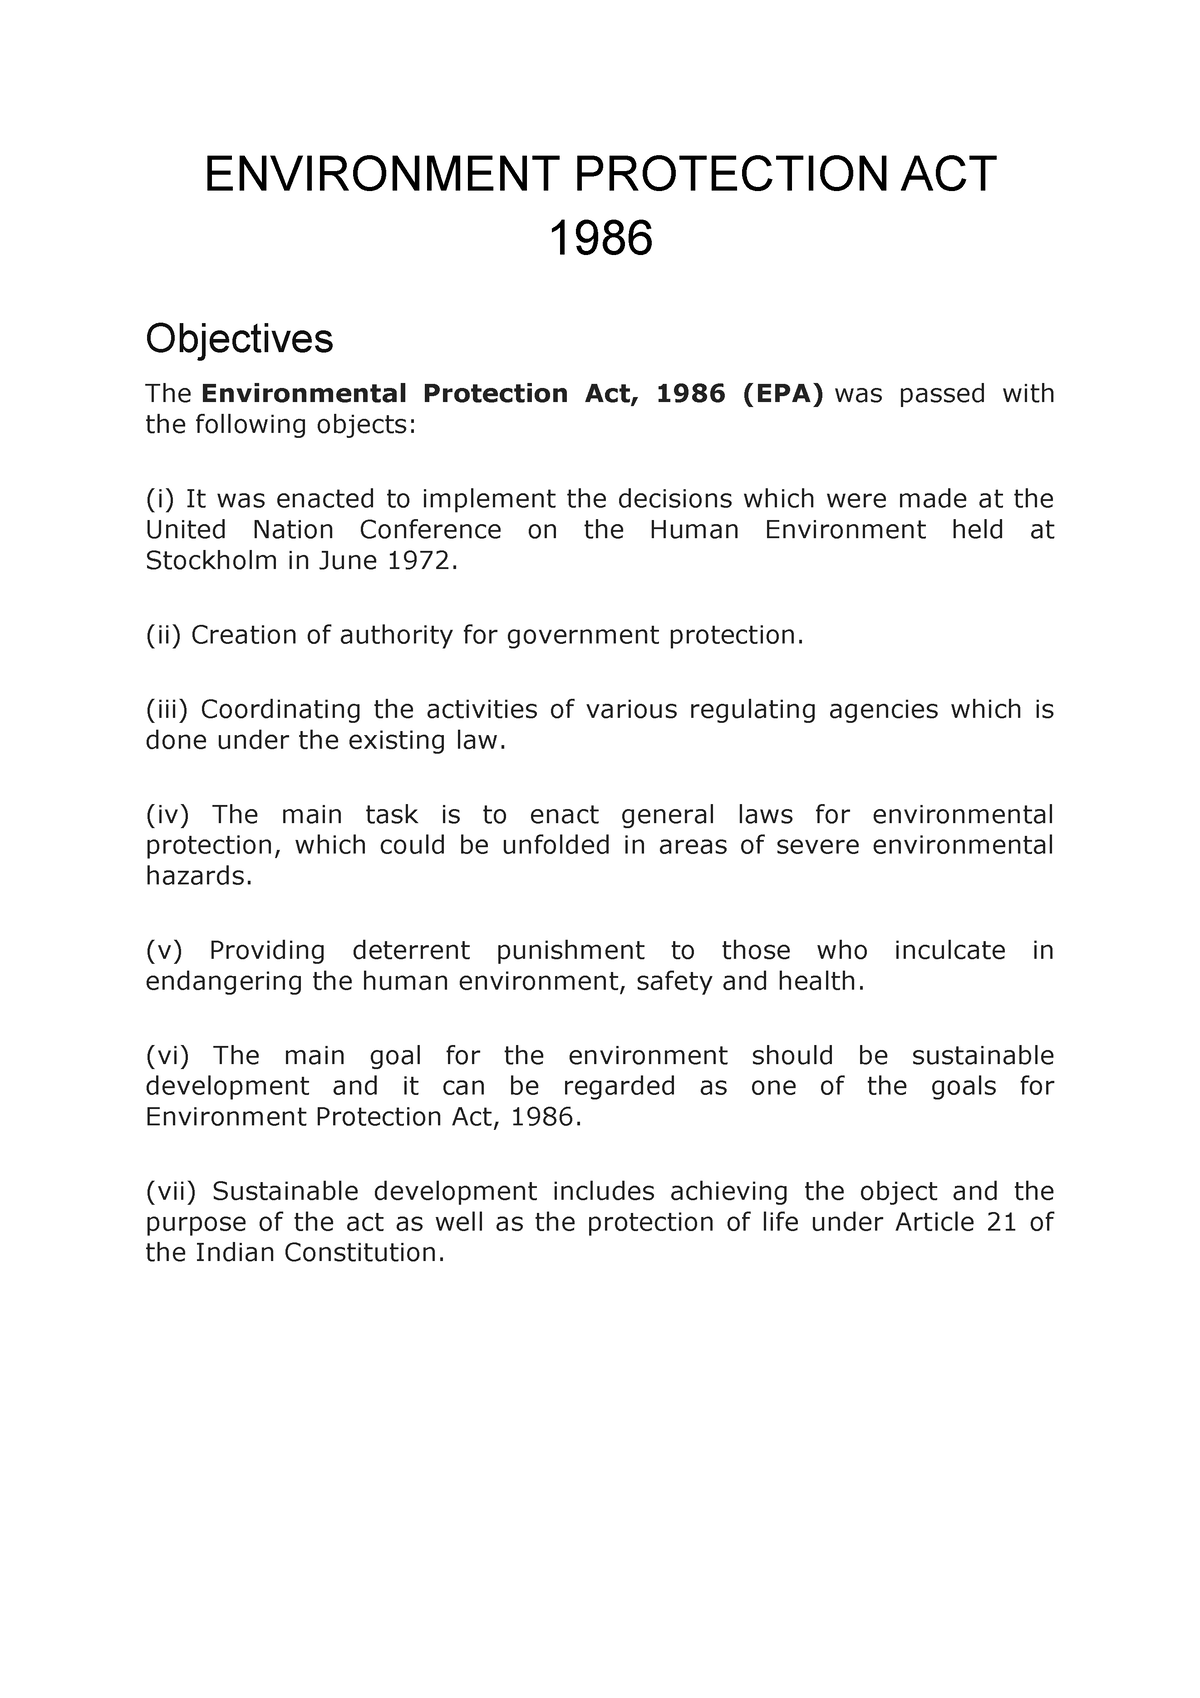 environmental protection act 1986 essay